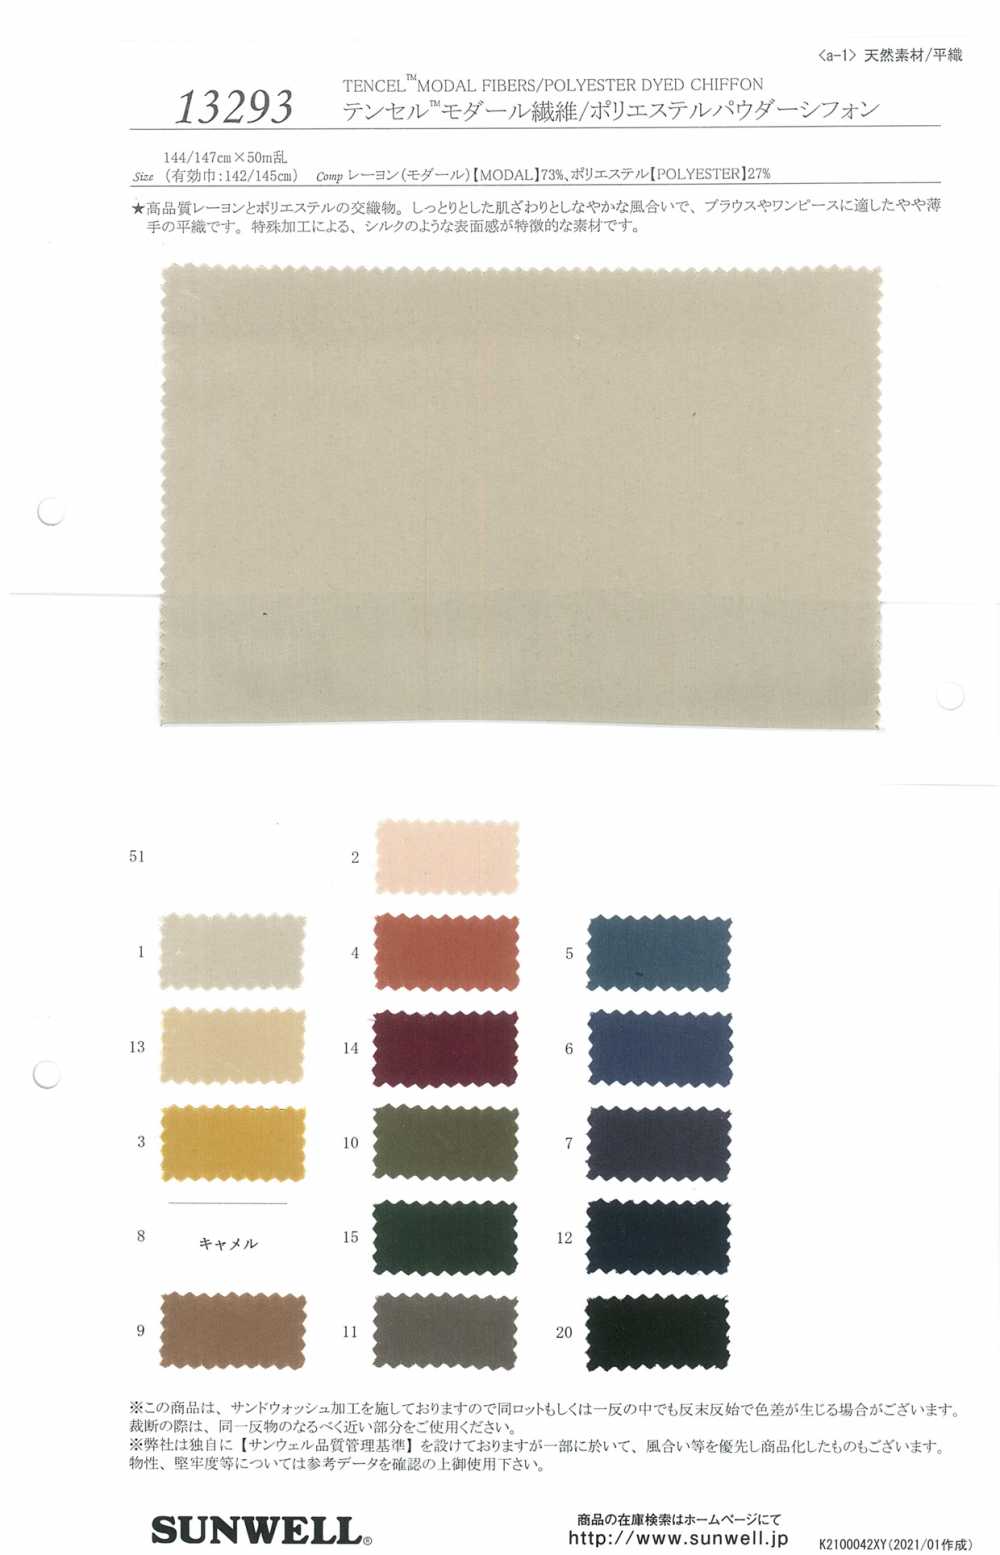 13293 Tencel (TM) Modal Fiber / Polyester Powder Chiffon[Textile / Fabric]  SUNWELL/Okura Shoji Co., Ltd. - ApparelX